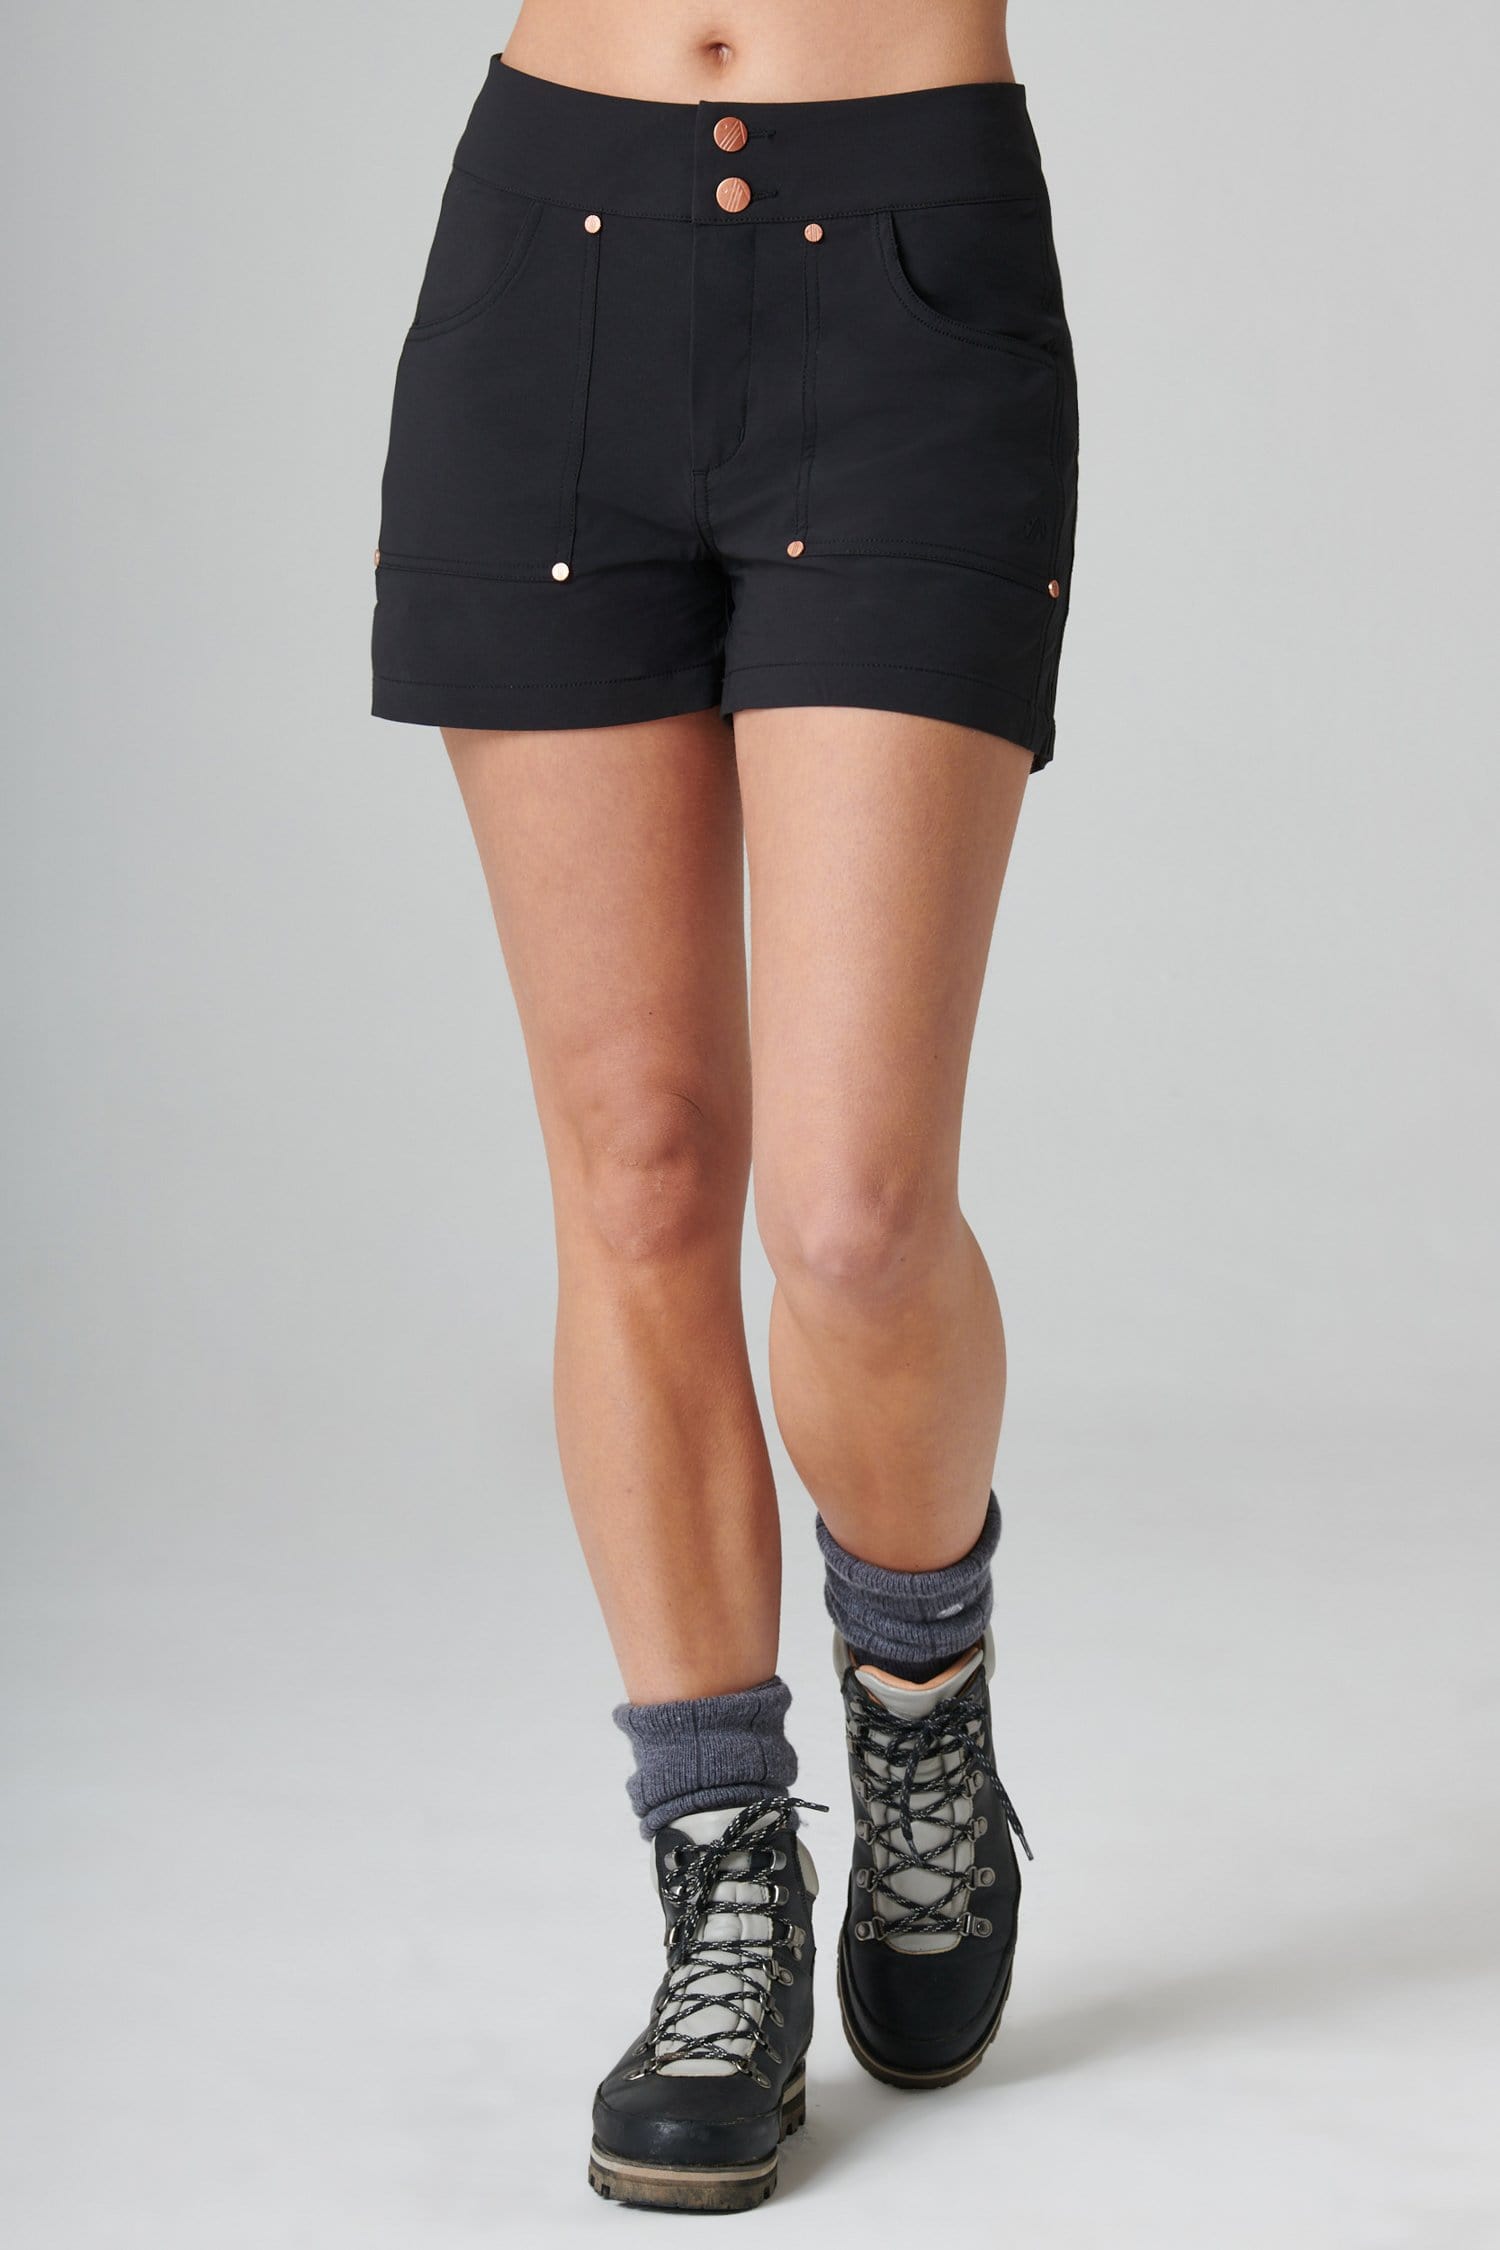 Trek Shorts - Black - 34 / Uk16 - Womens - Acai Outdoorwear